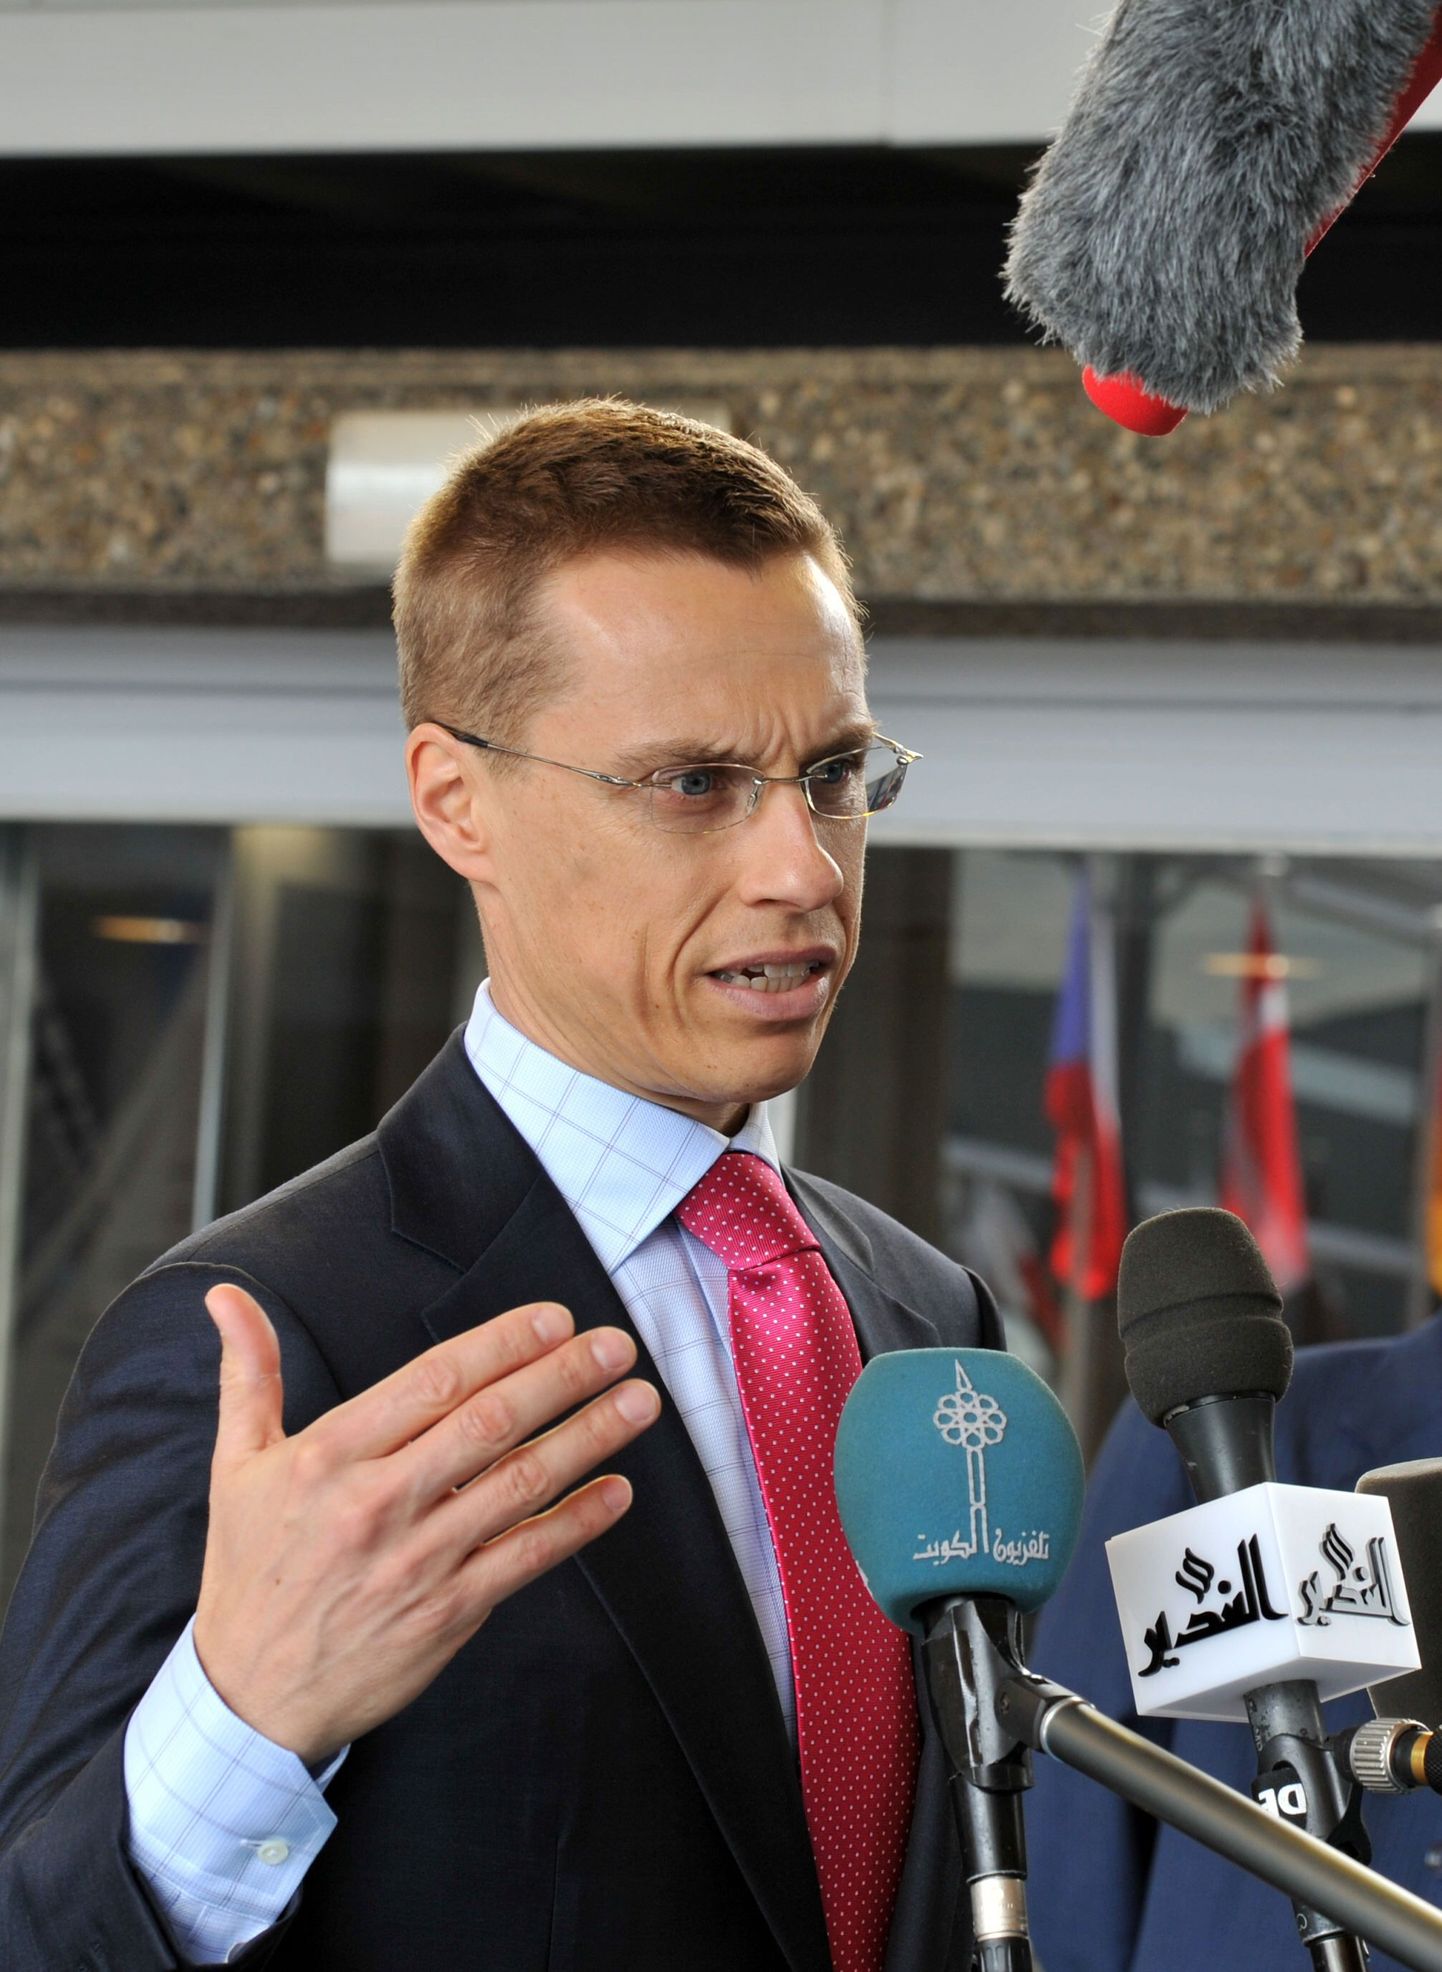 Soome välisminister Alexander Stubb